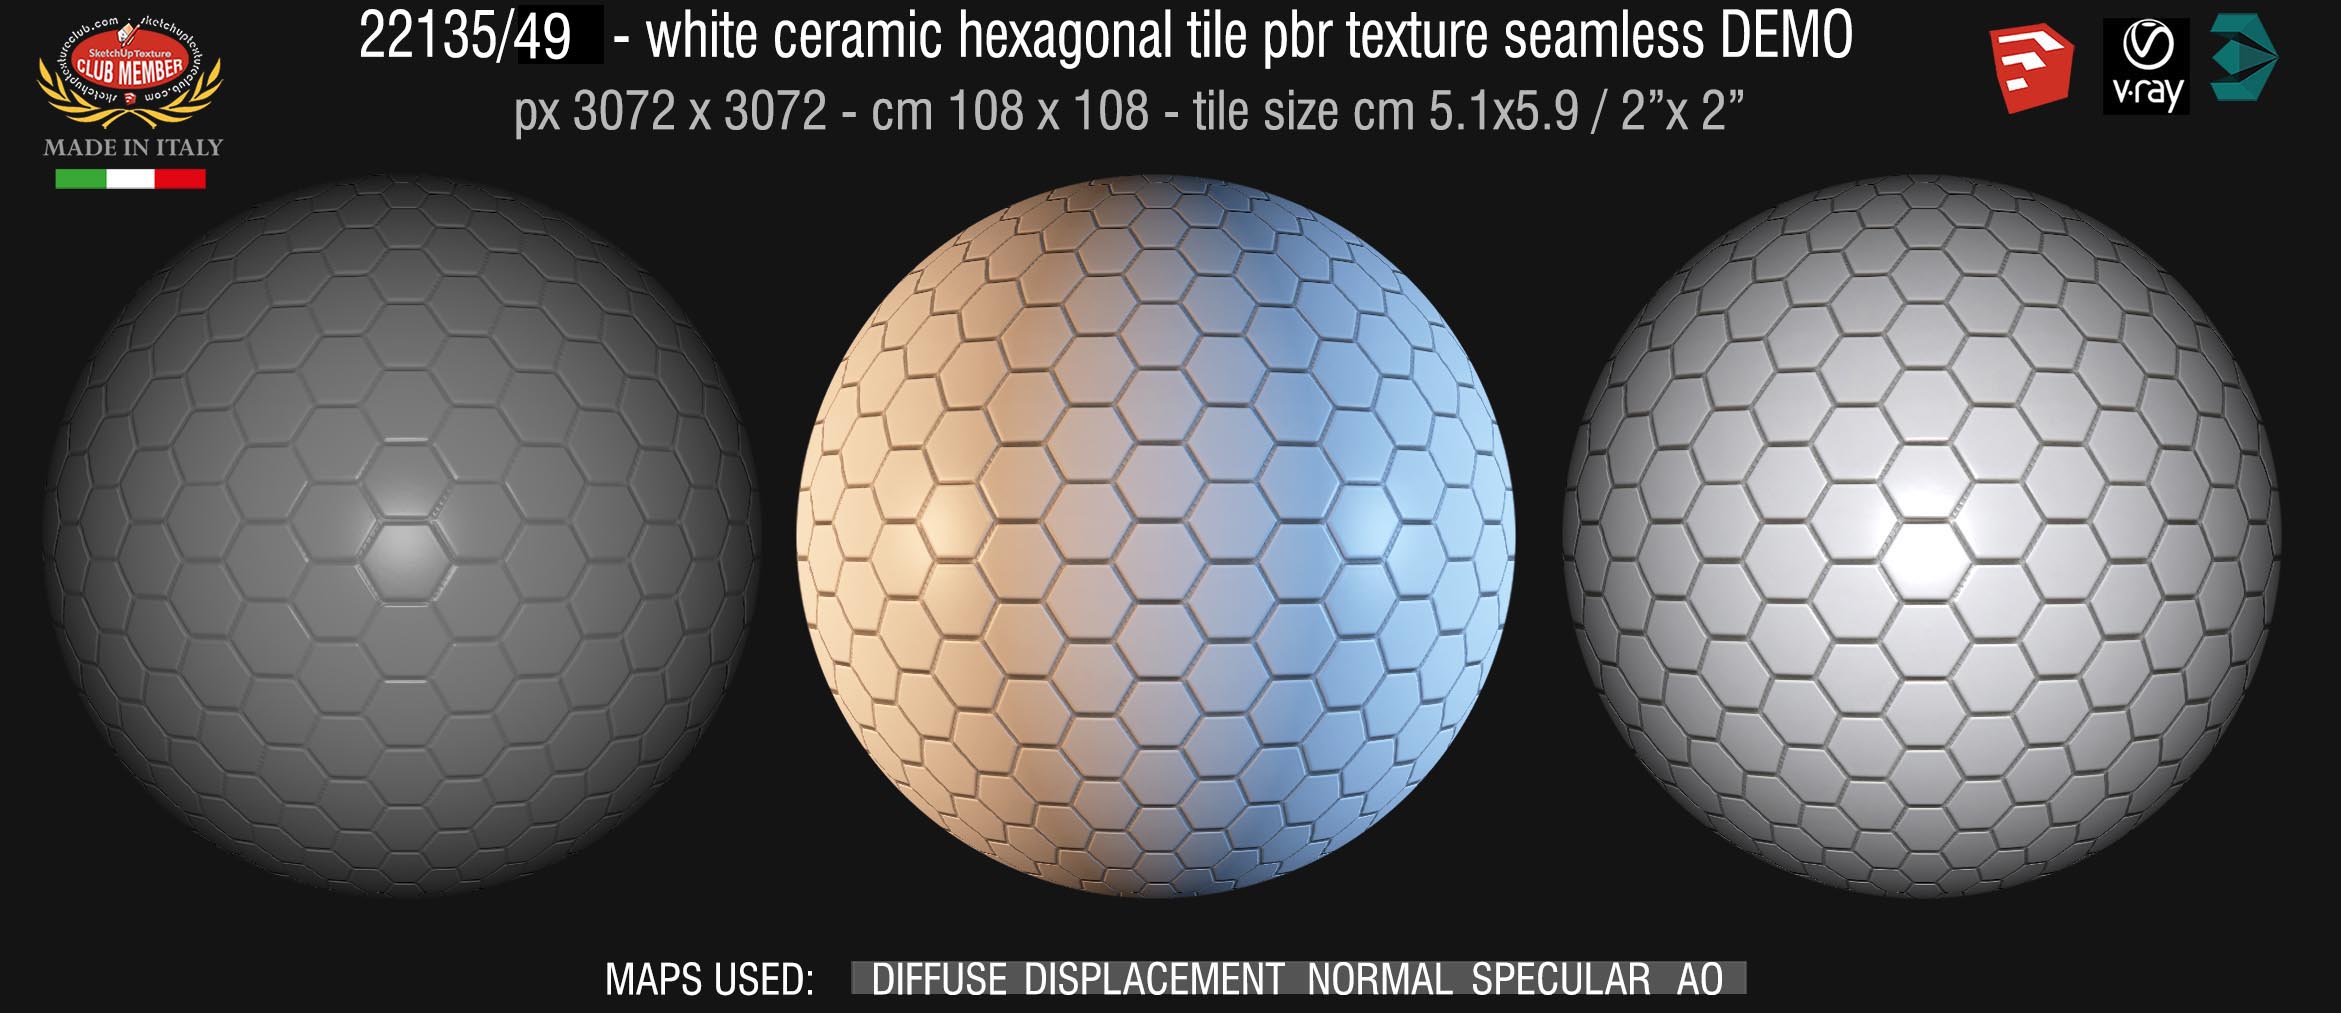 white ceramic hexagonal tile pbr texture seamless 22135